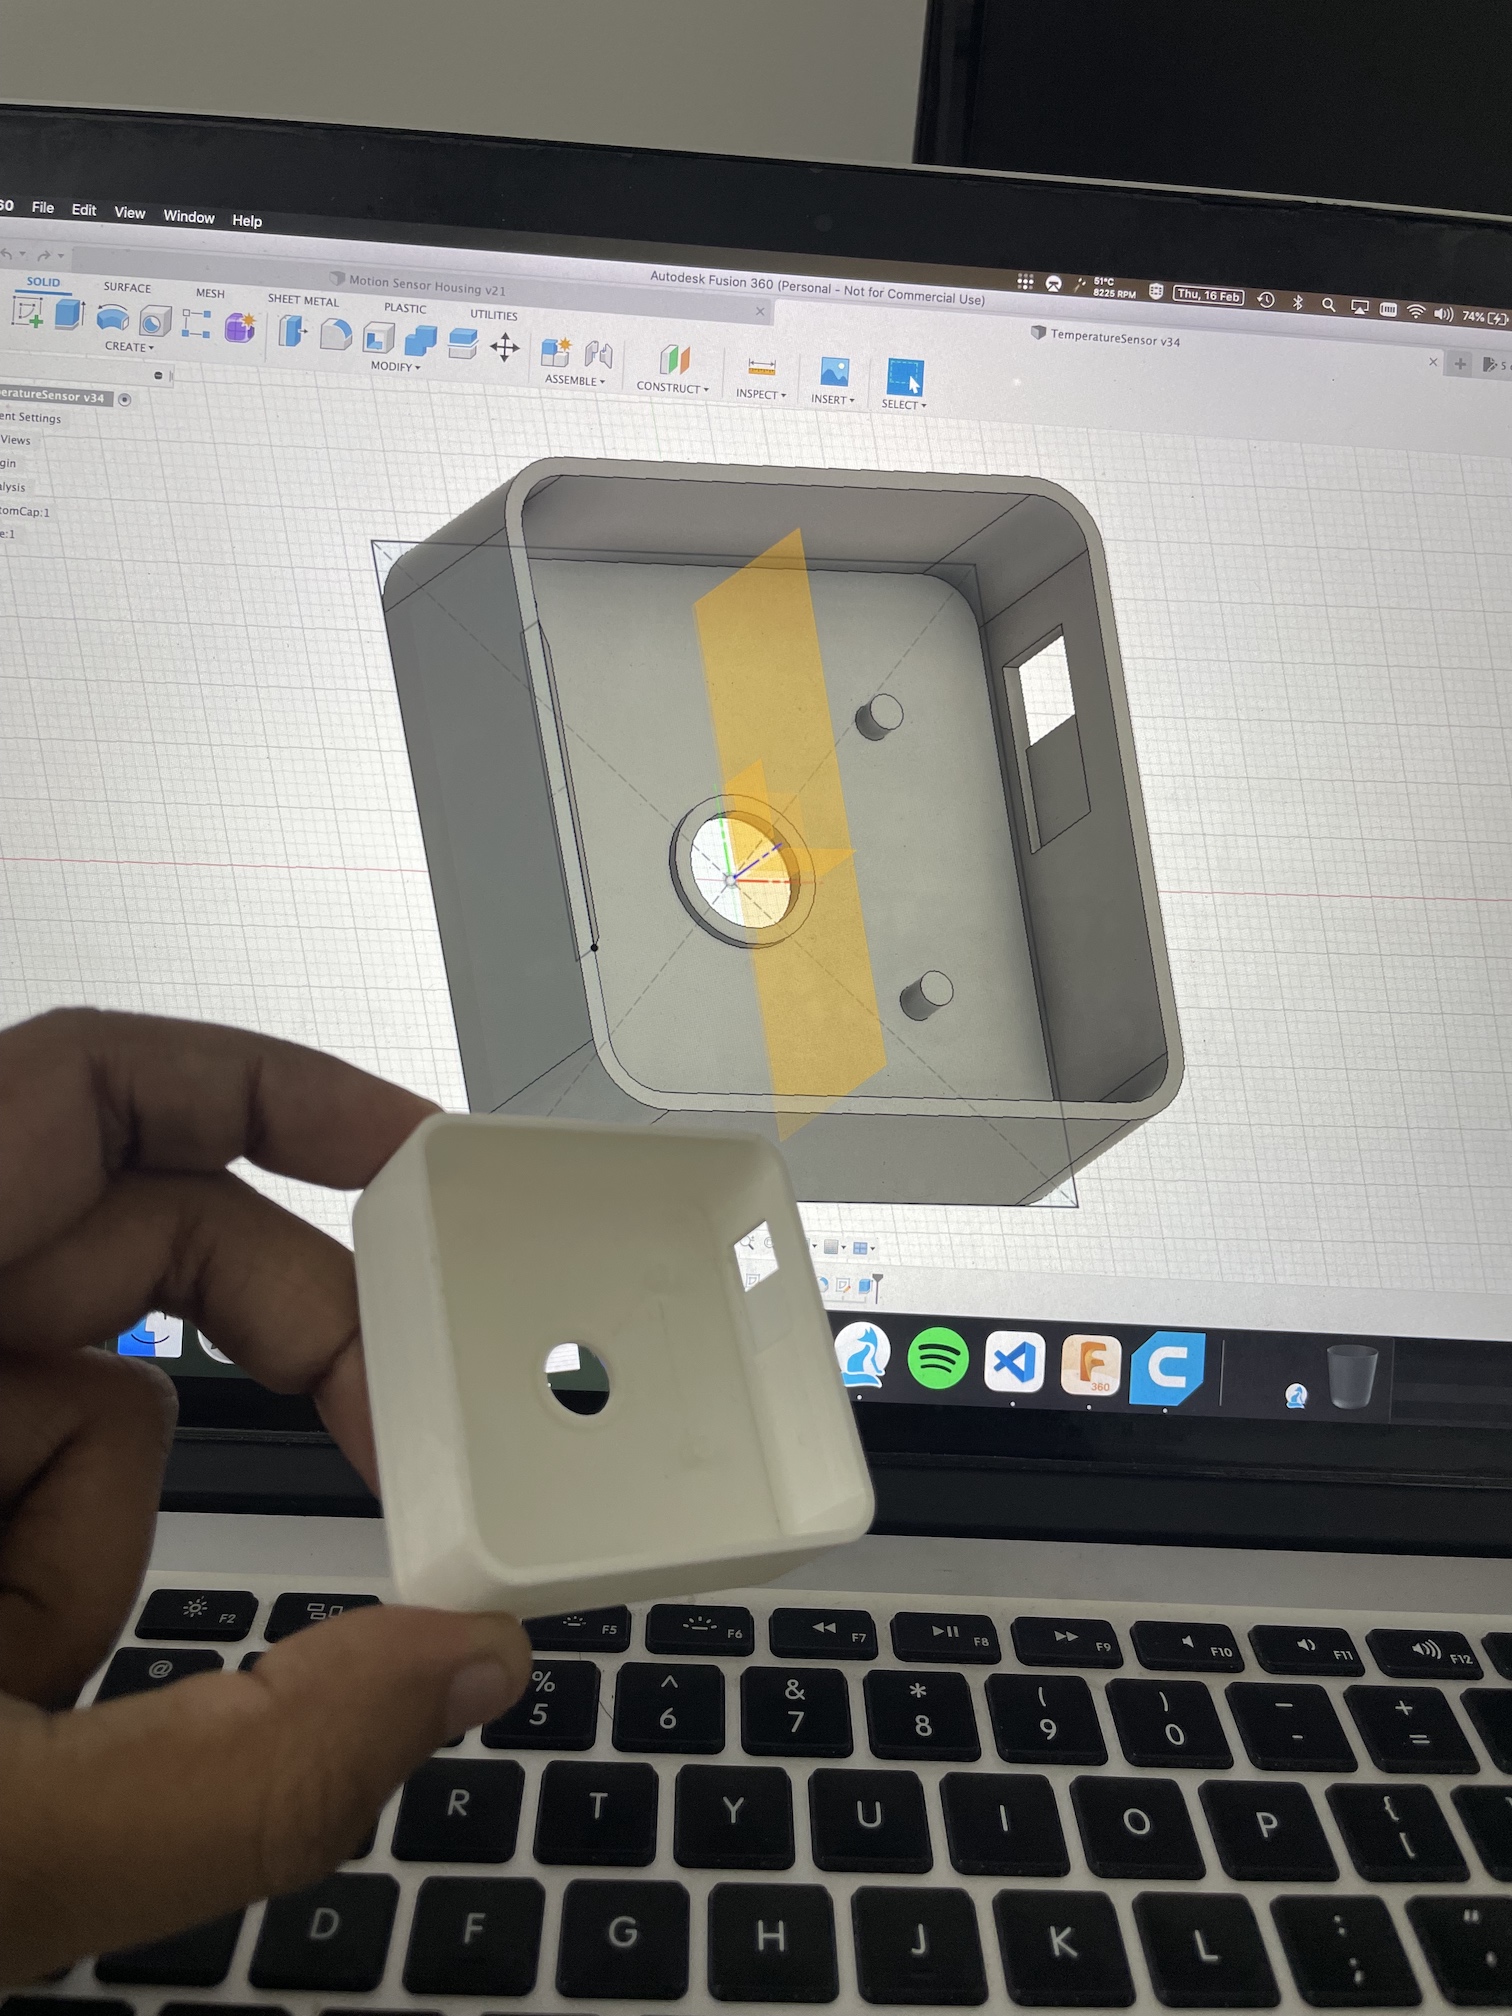 3D printed case